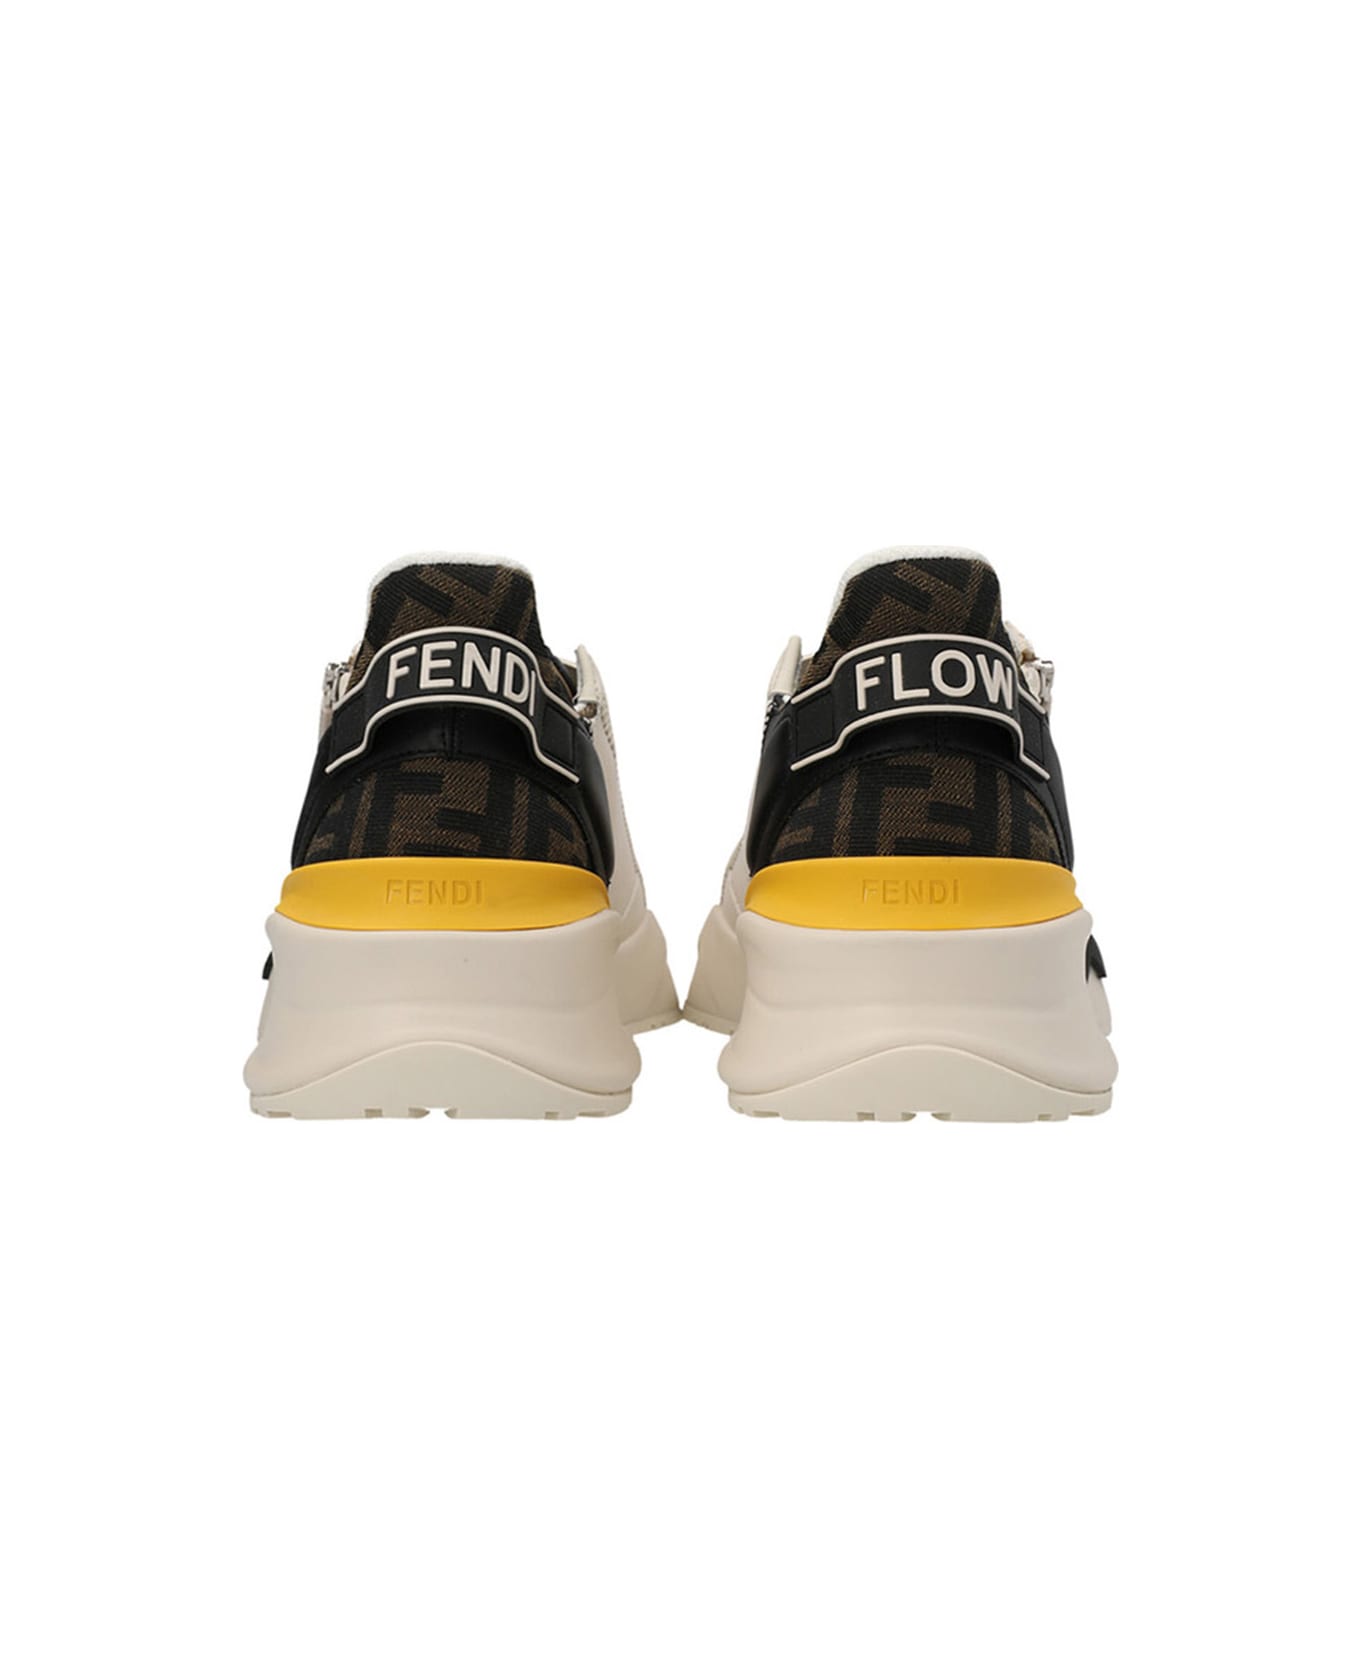 Fendi 'flow' Sneakers - Multicolor